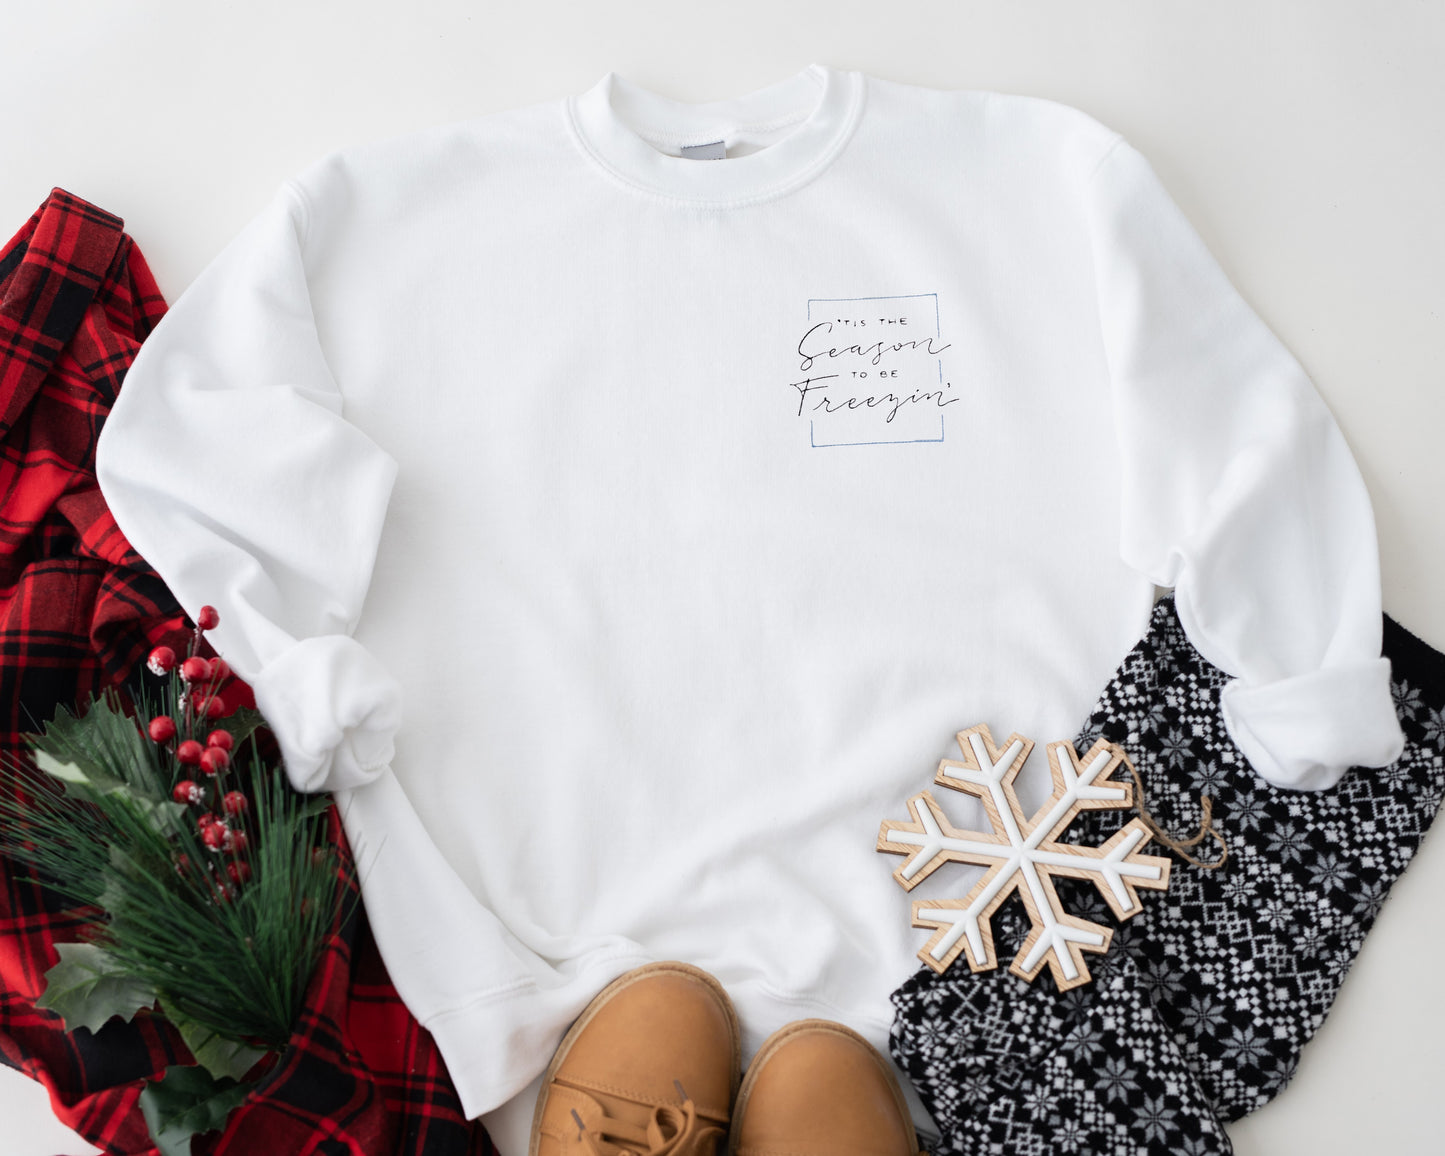 Tis the Season to be Freezin' Embroidered Unisex Adult Crewneck Sweatshirt